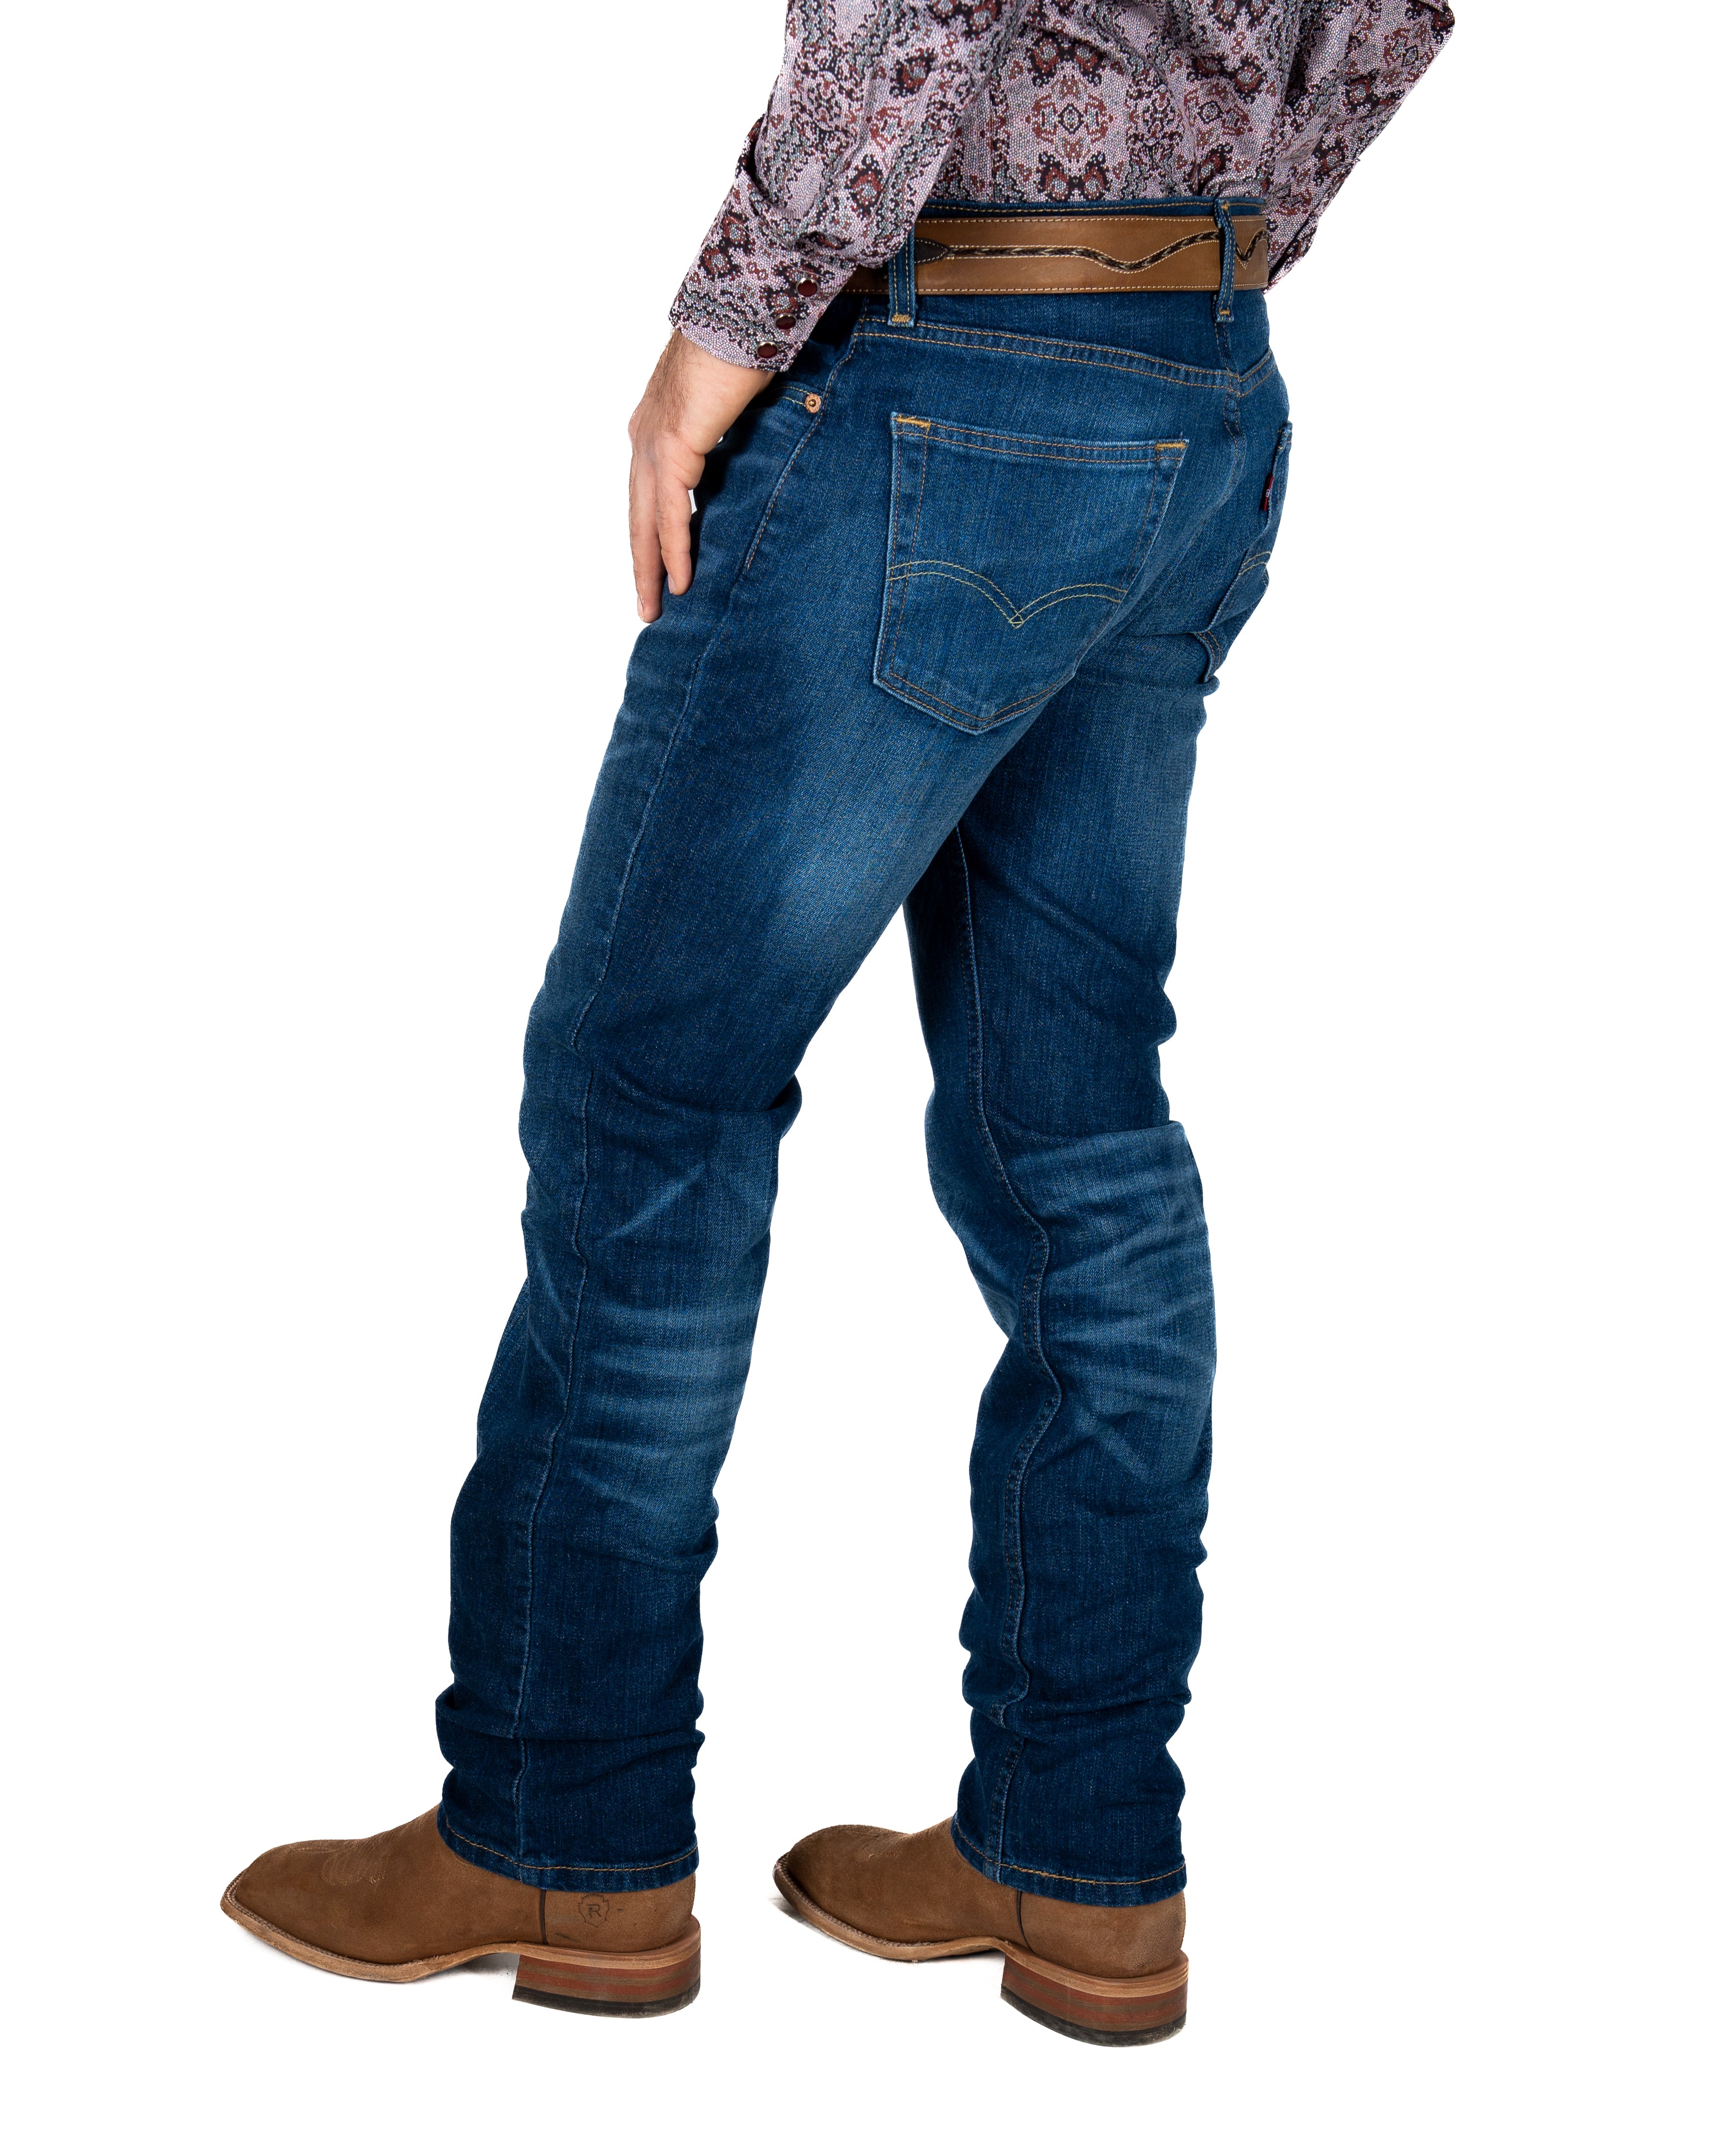 Jeans Levis 514 Straight Caballero